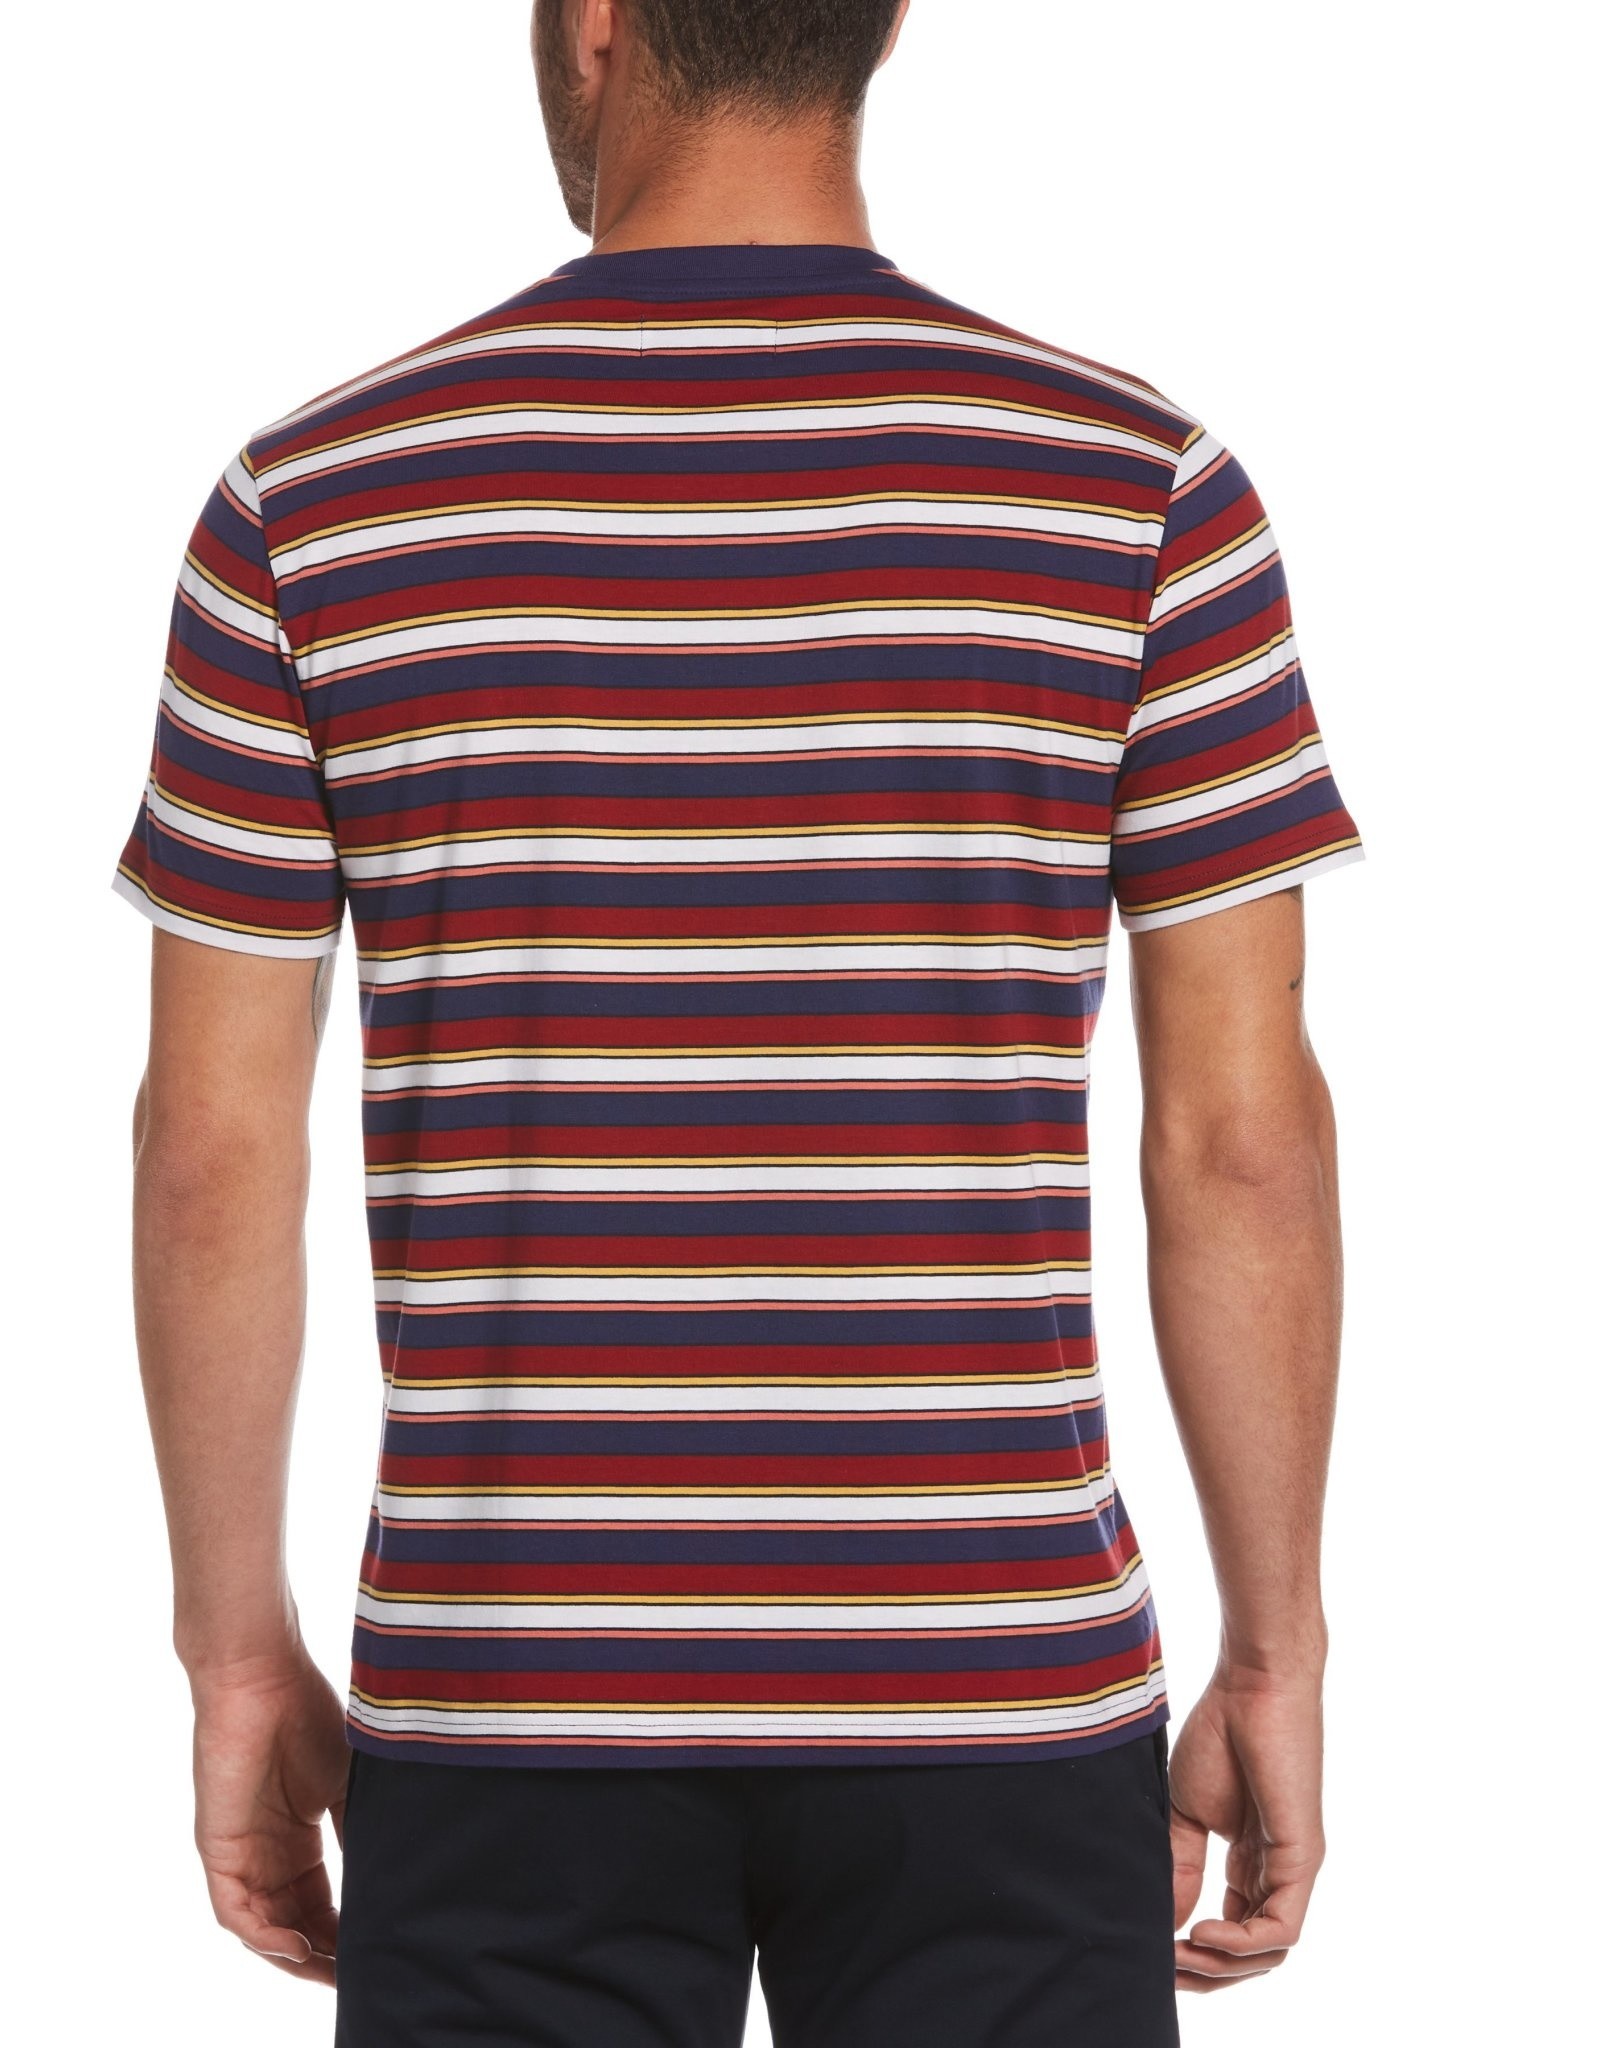 Penguin Multi-Color Stripe T-Shirt